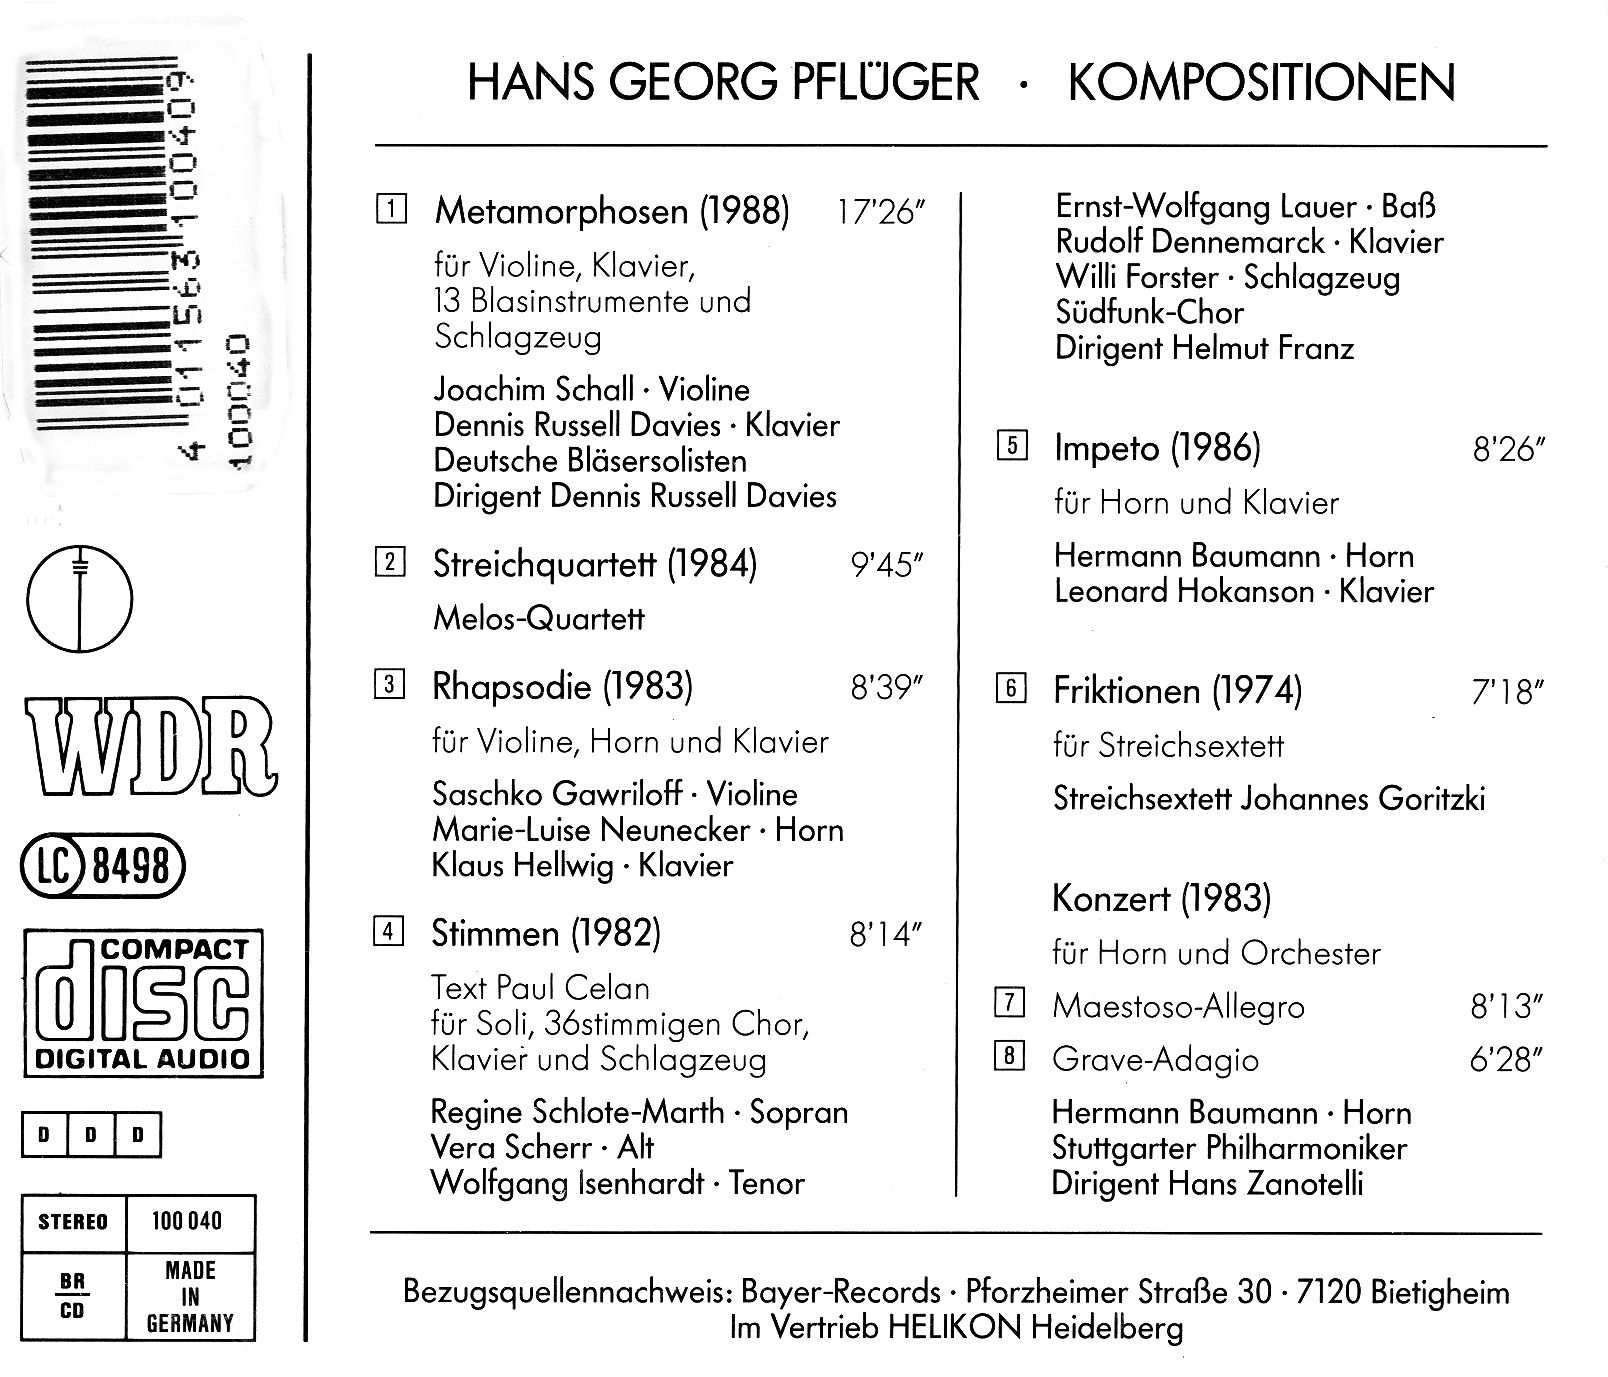 Hans Georg Pflüger - Kompositionen